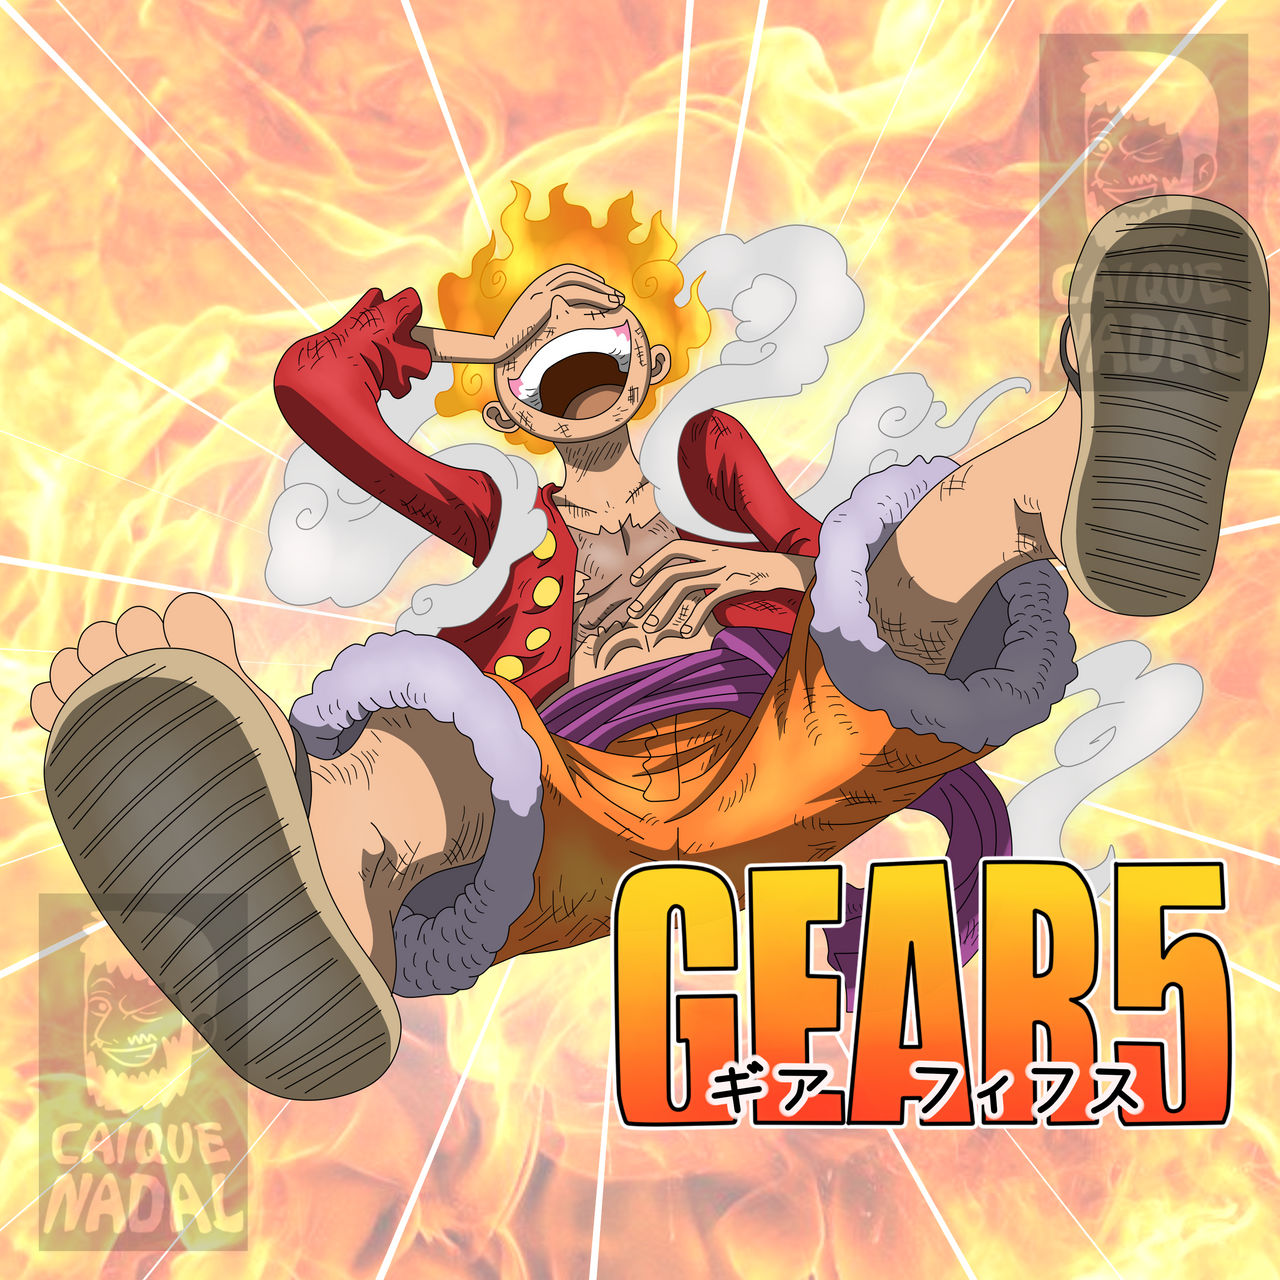 HOLD ON...Oda made Luffy a GOD (LITERALLY) - Gear 5 Nika Awaking EXPLAINED  - YouTube